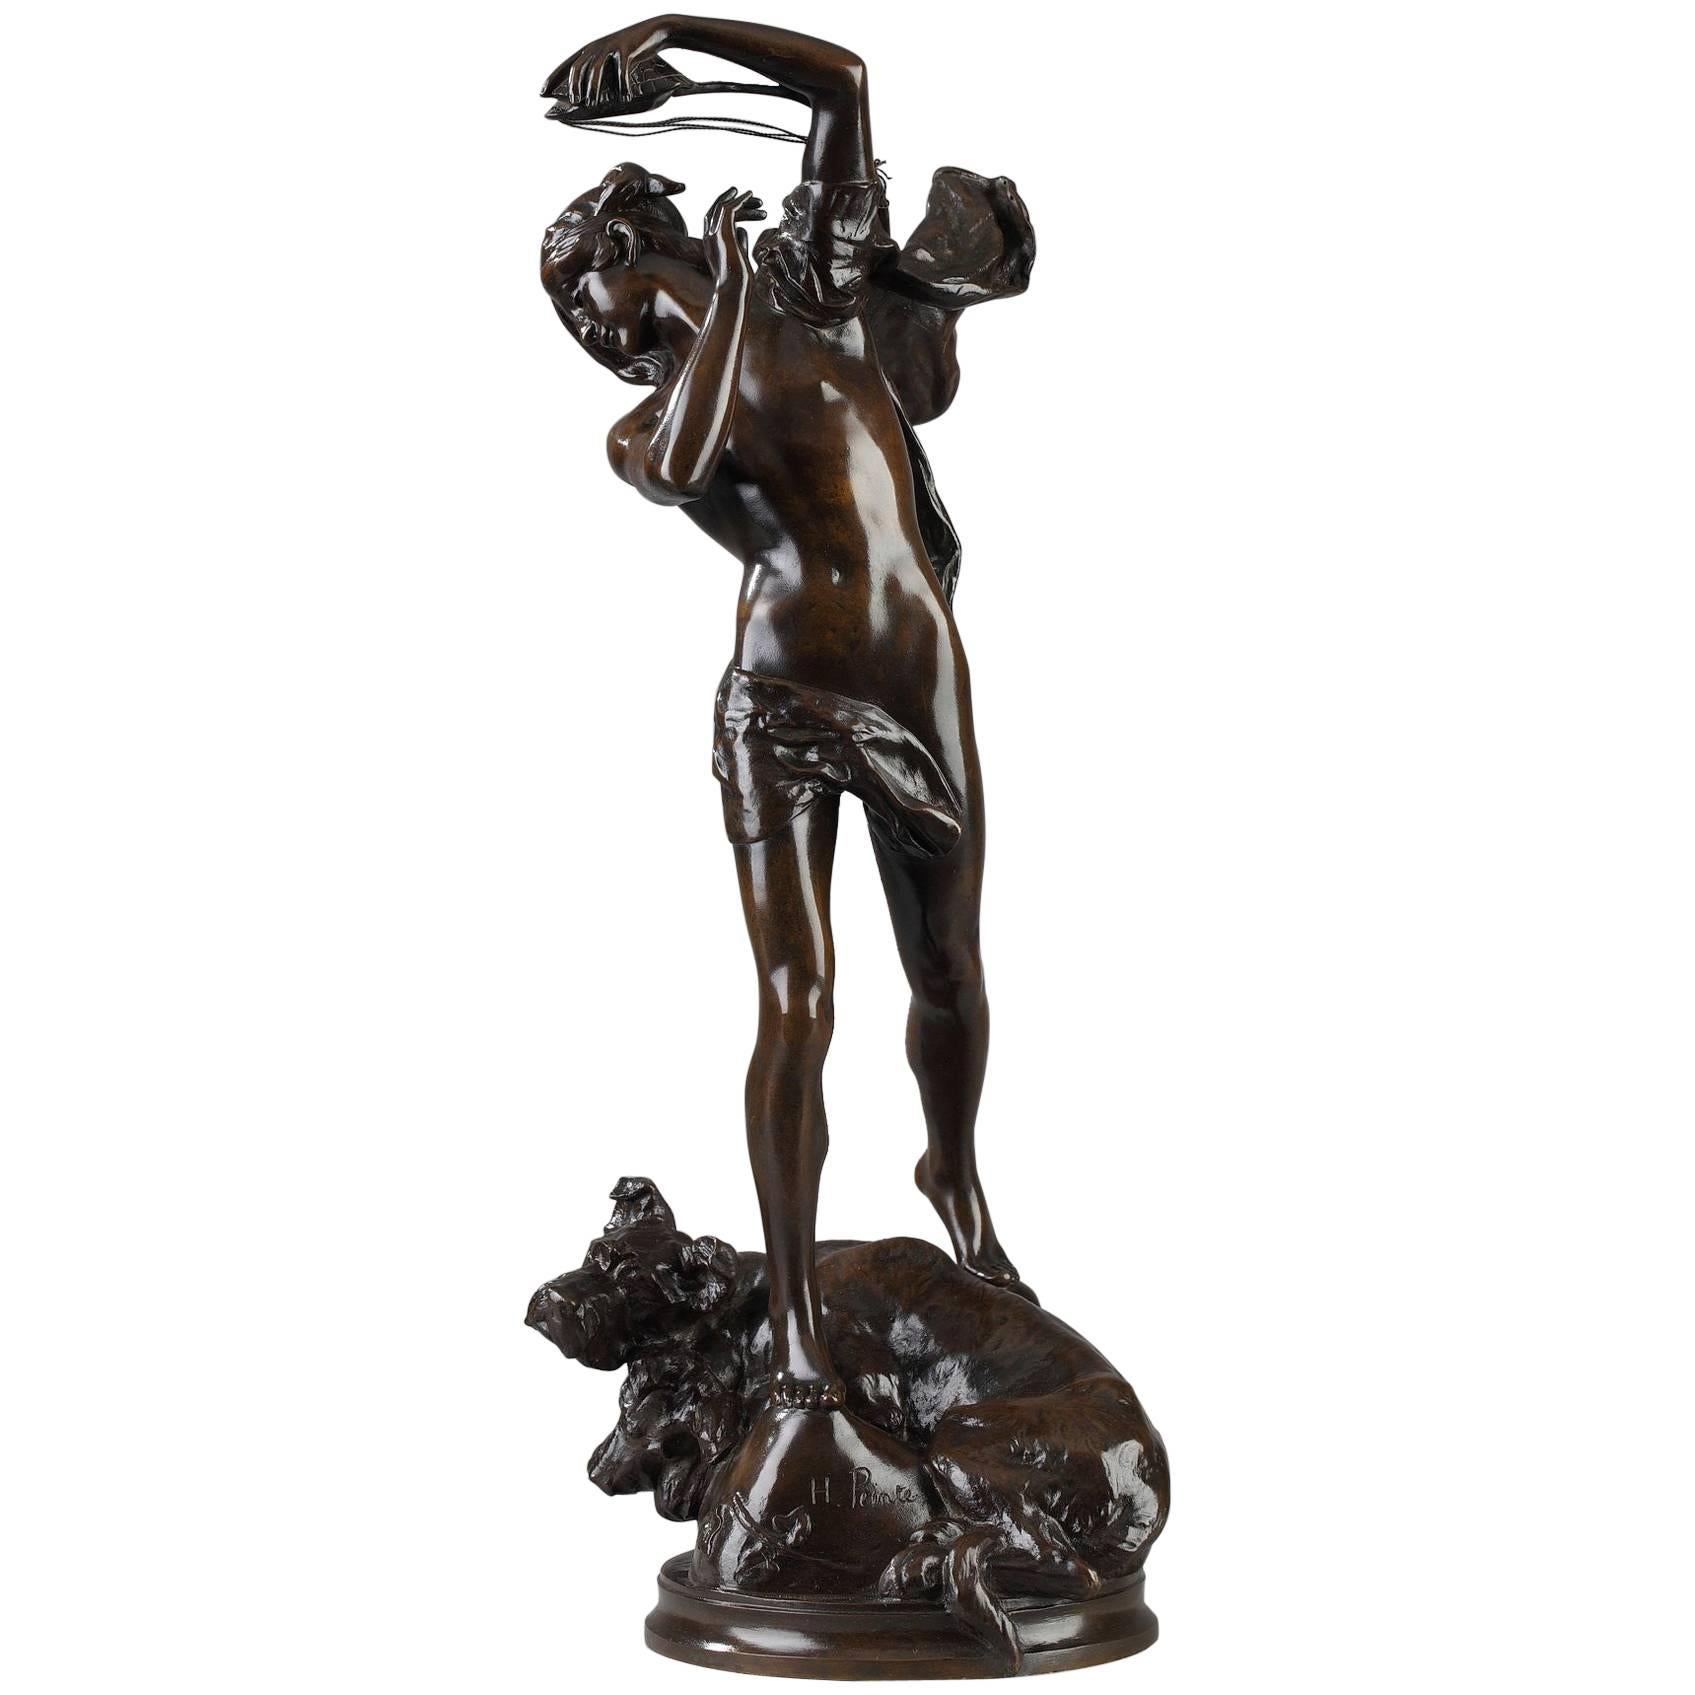  19th Century Bronze Sculpture "Orpheus and Cerberus" by Henri Peinte(1845-1912